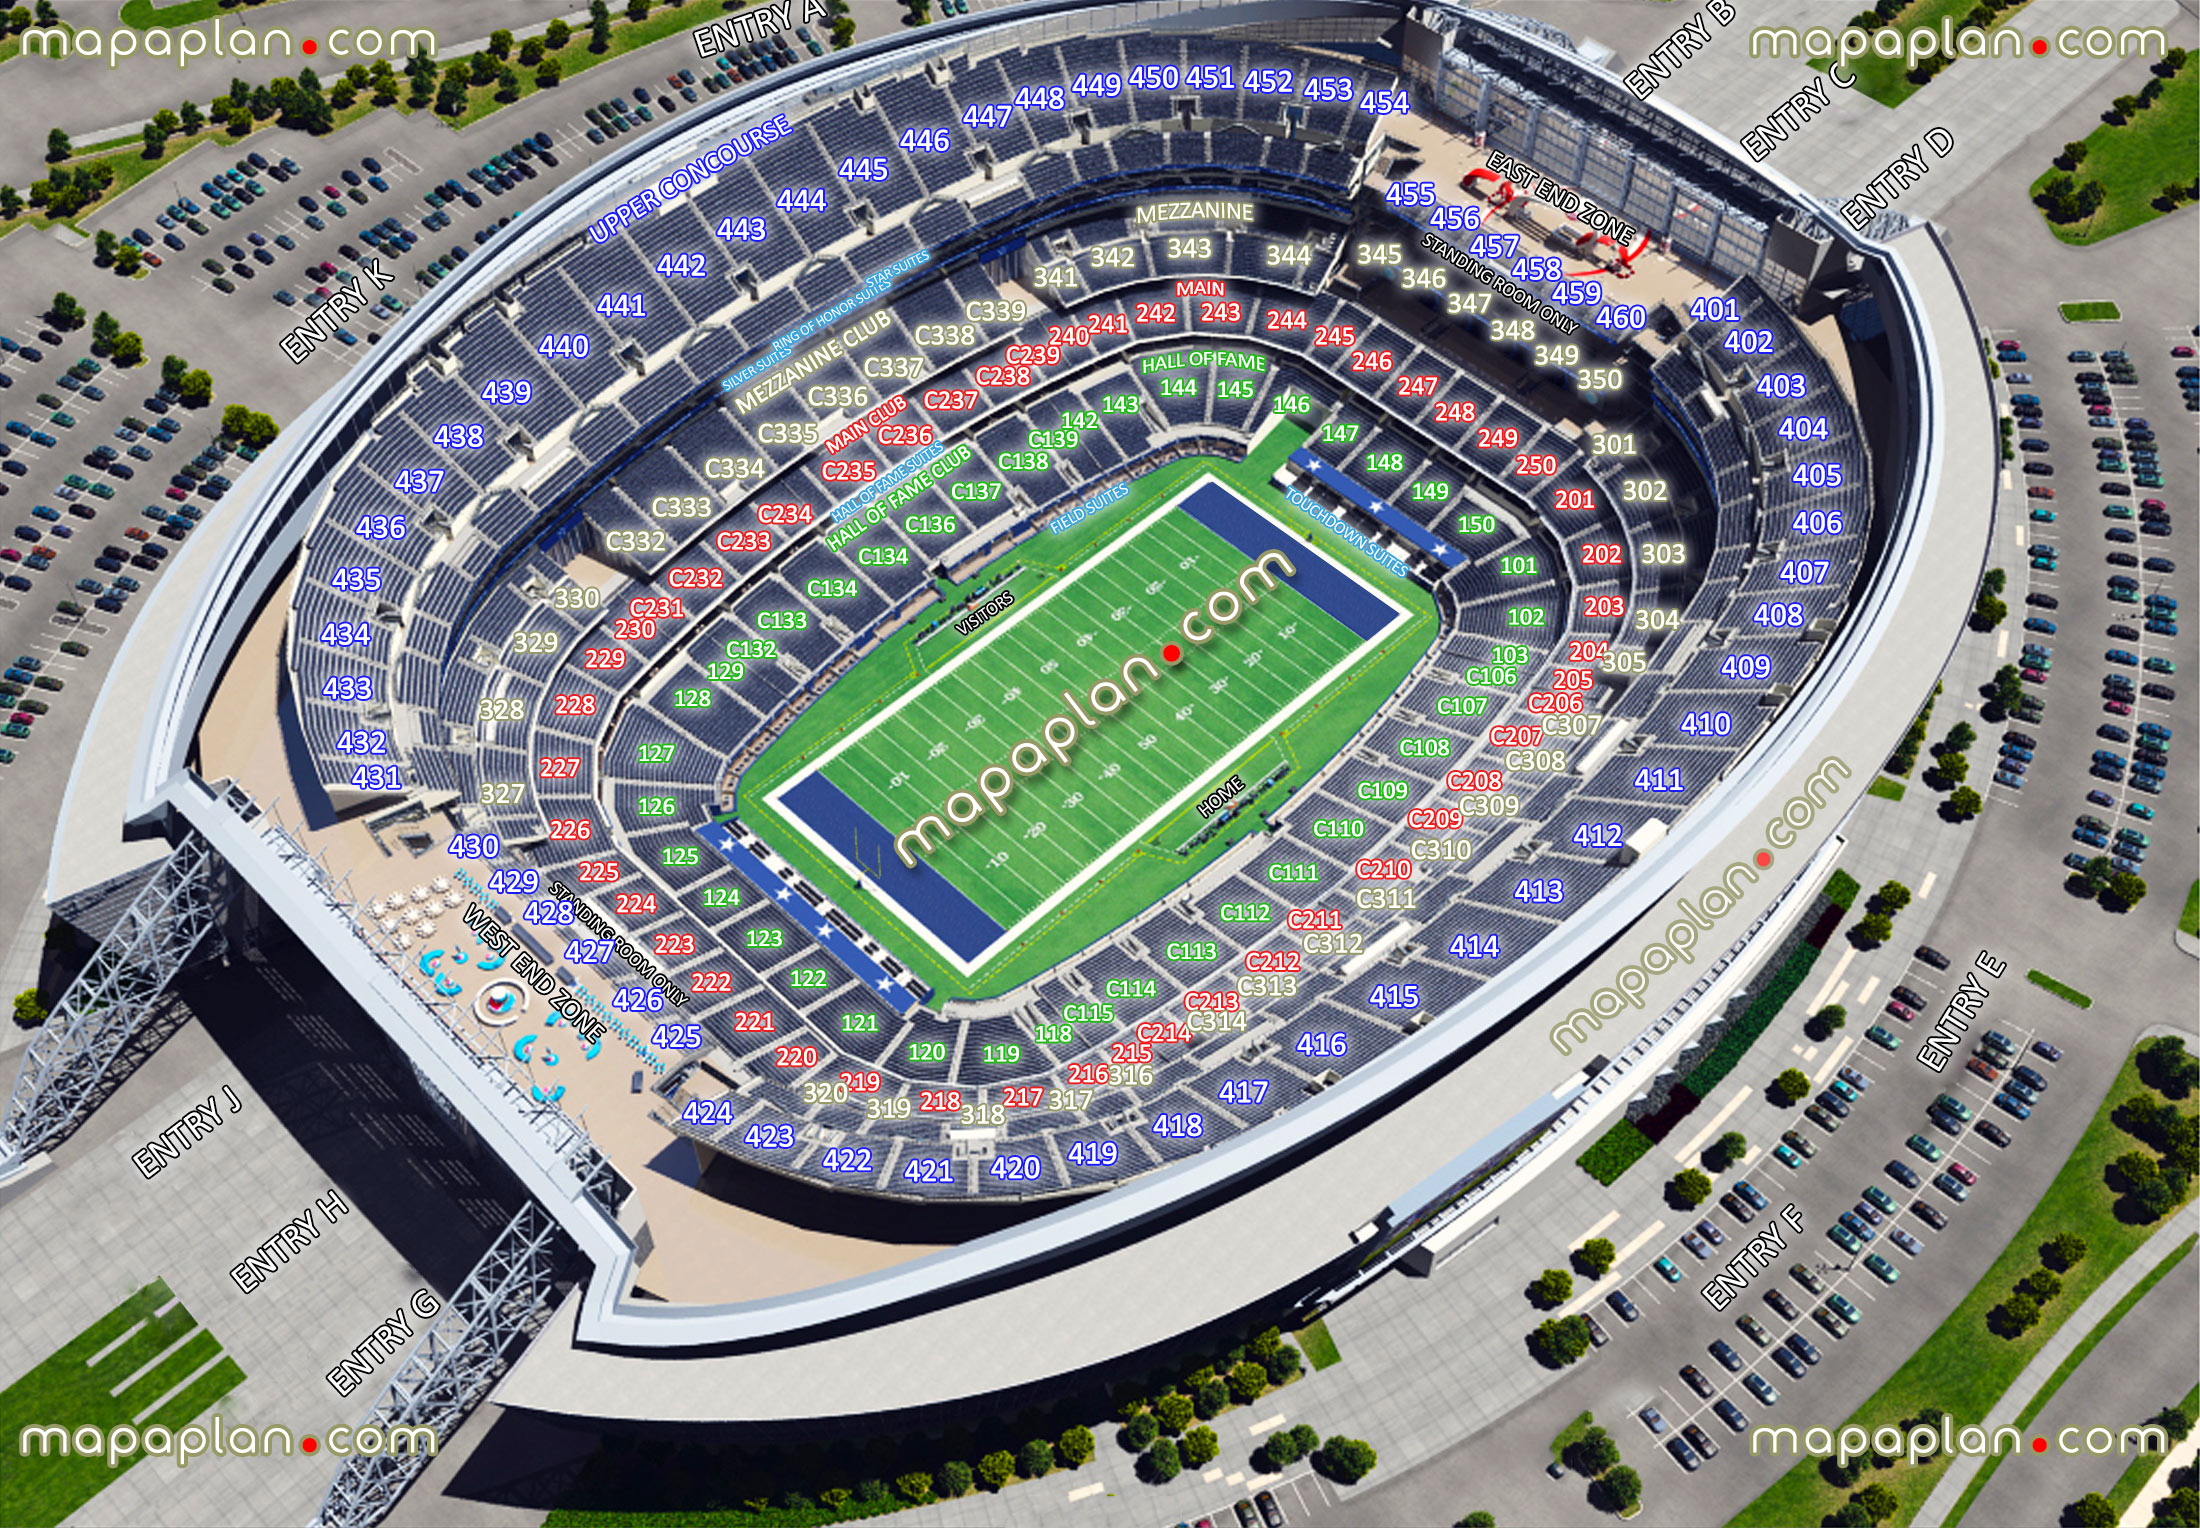 3d Seating Chart Dallas Cowboys Stadium